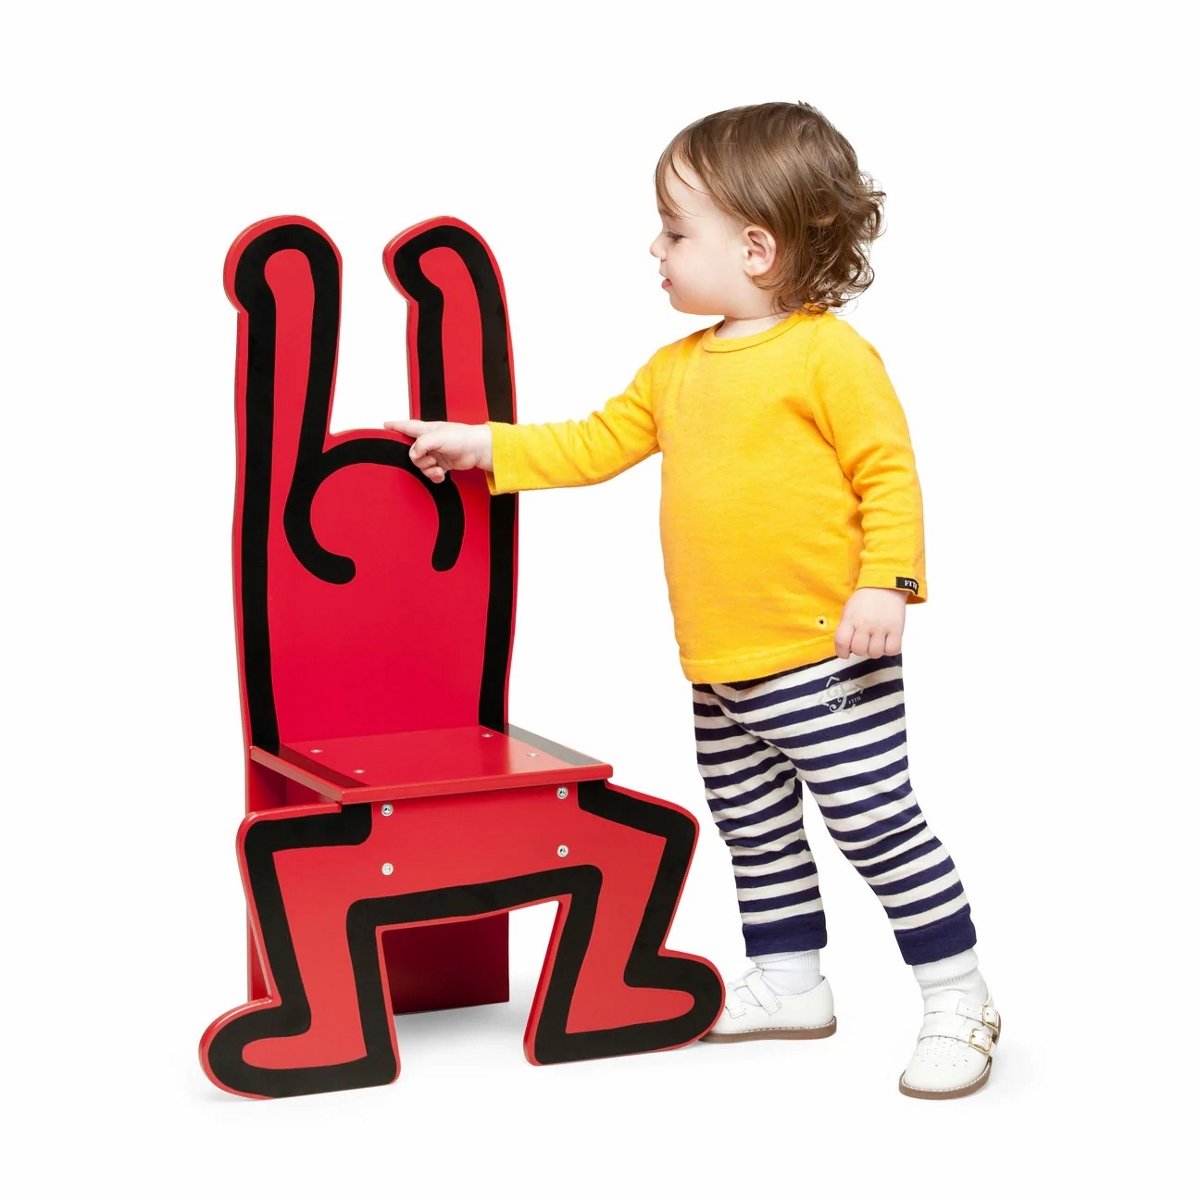 Sedia per bambini Keith Haring, MoMa store